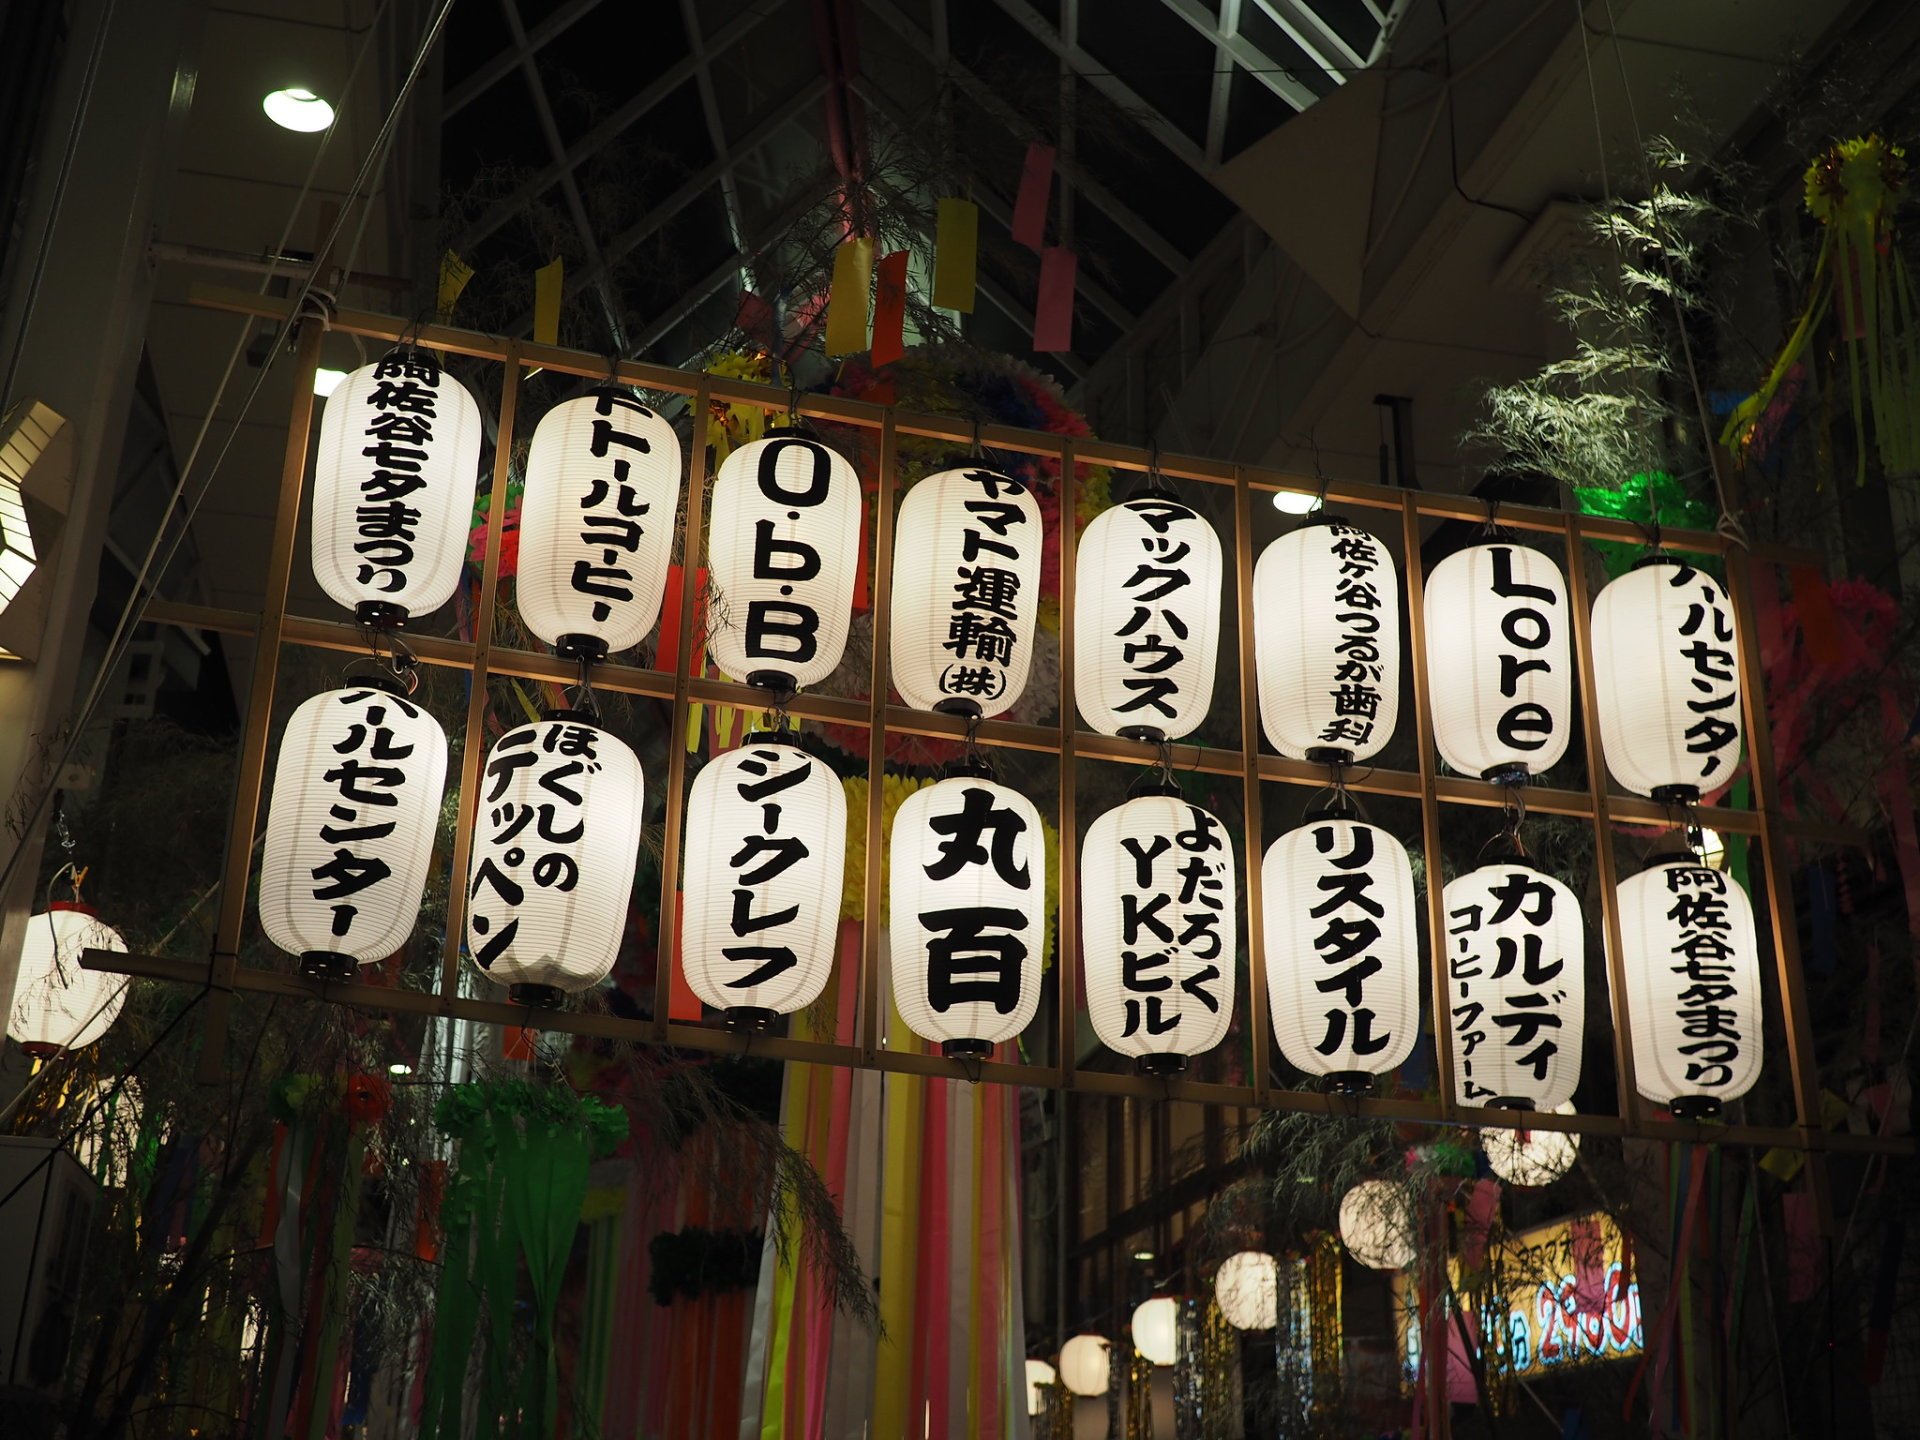 Festival di Tanabata